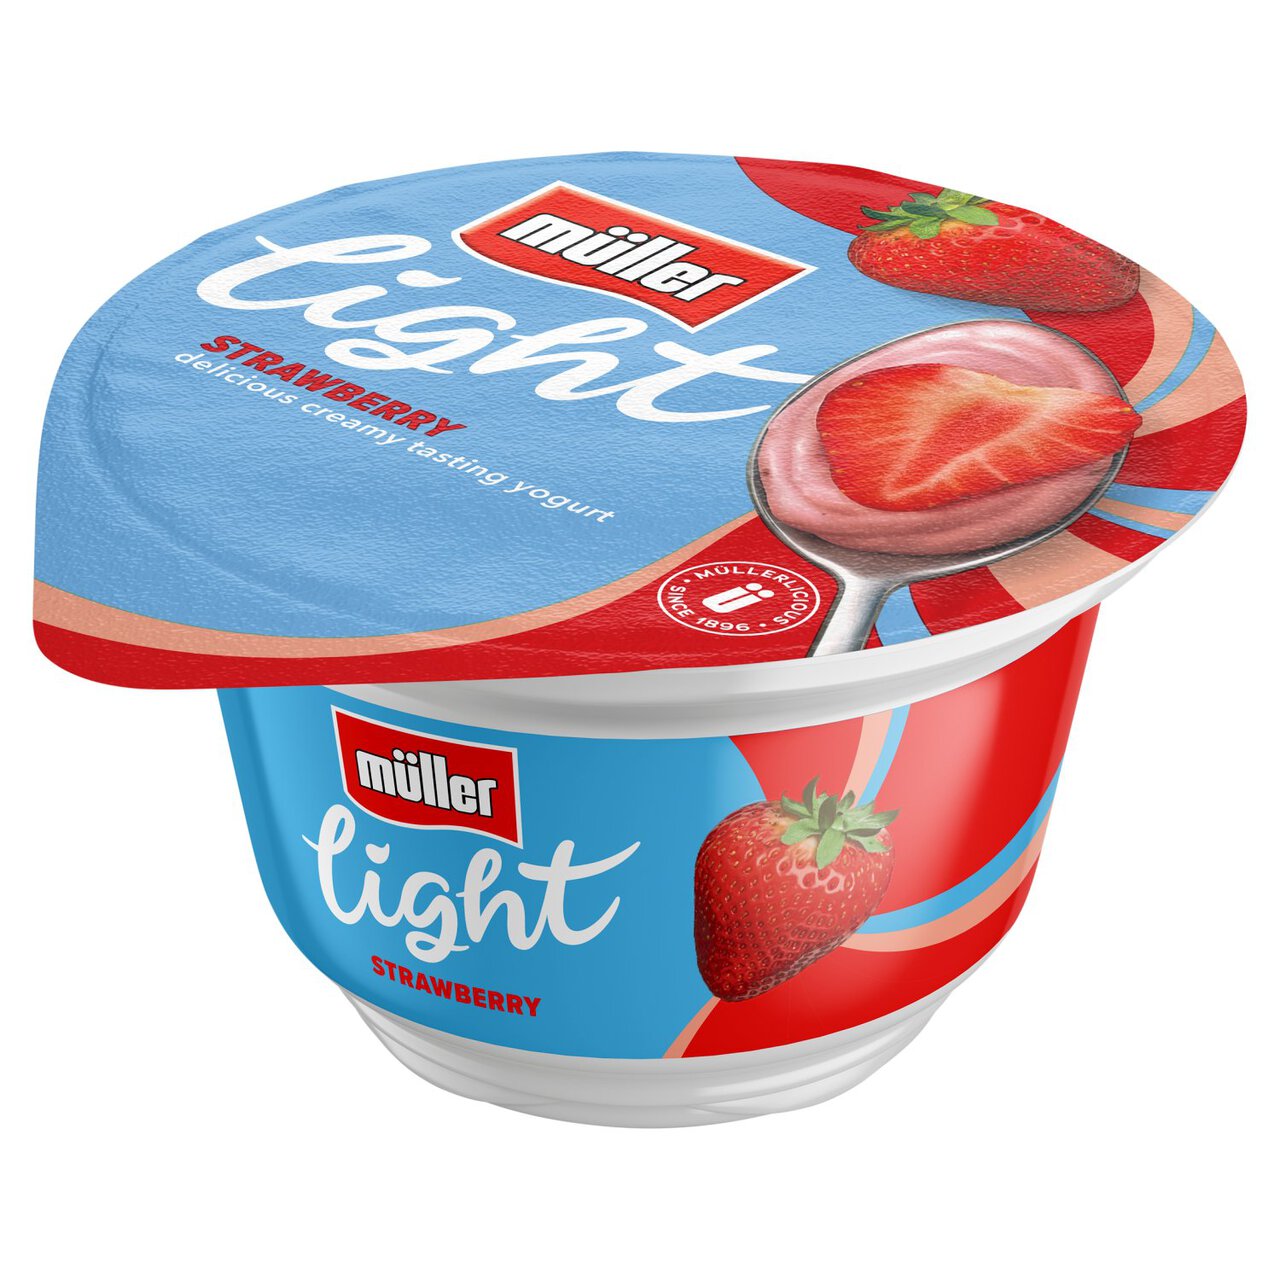 Muller Light Strawberry Fat Free Yogurt 160g